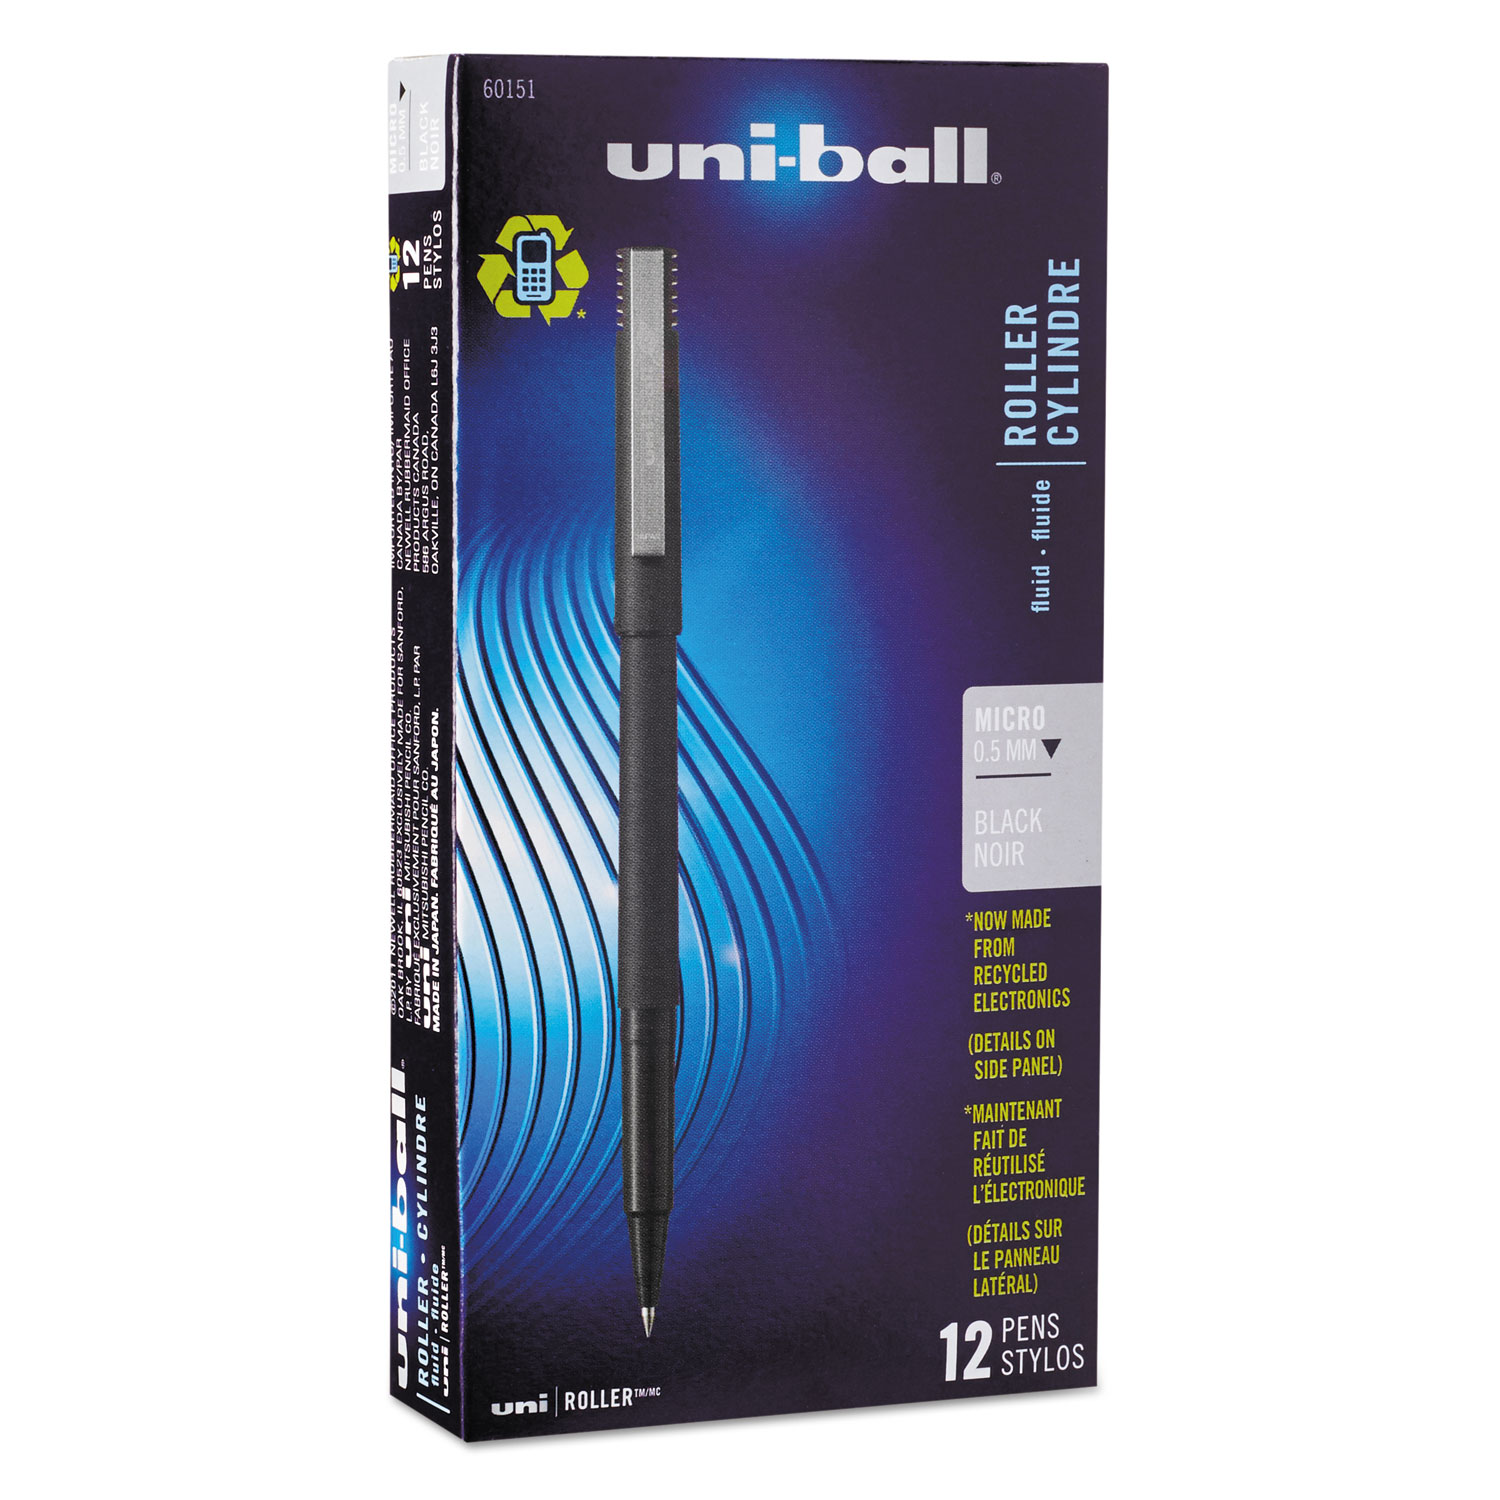  uni-ball 60151 Stick Roller Ball Pen, Micro 0.5mm, Black Ink, Black Matte Barrel, Dozen (UBC60151) 